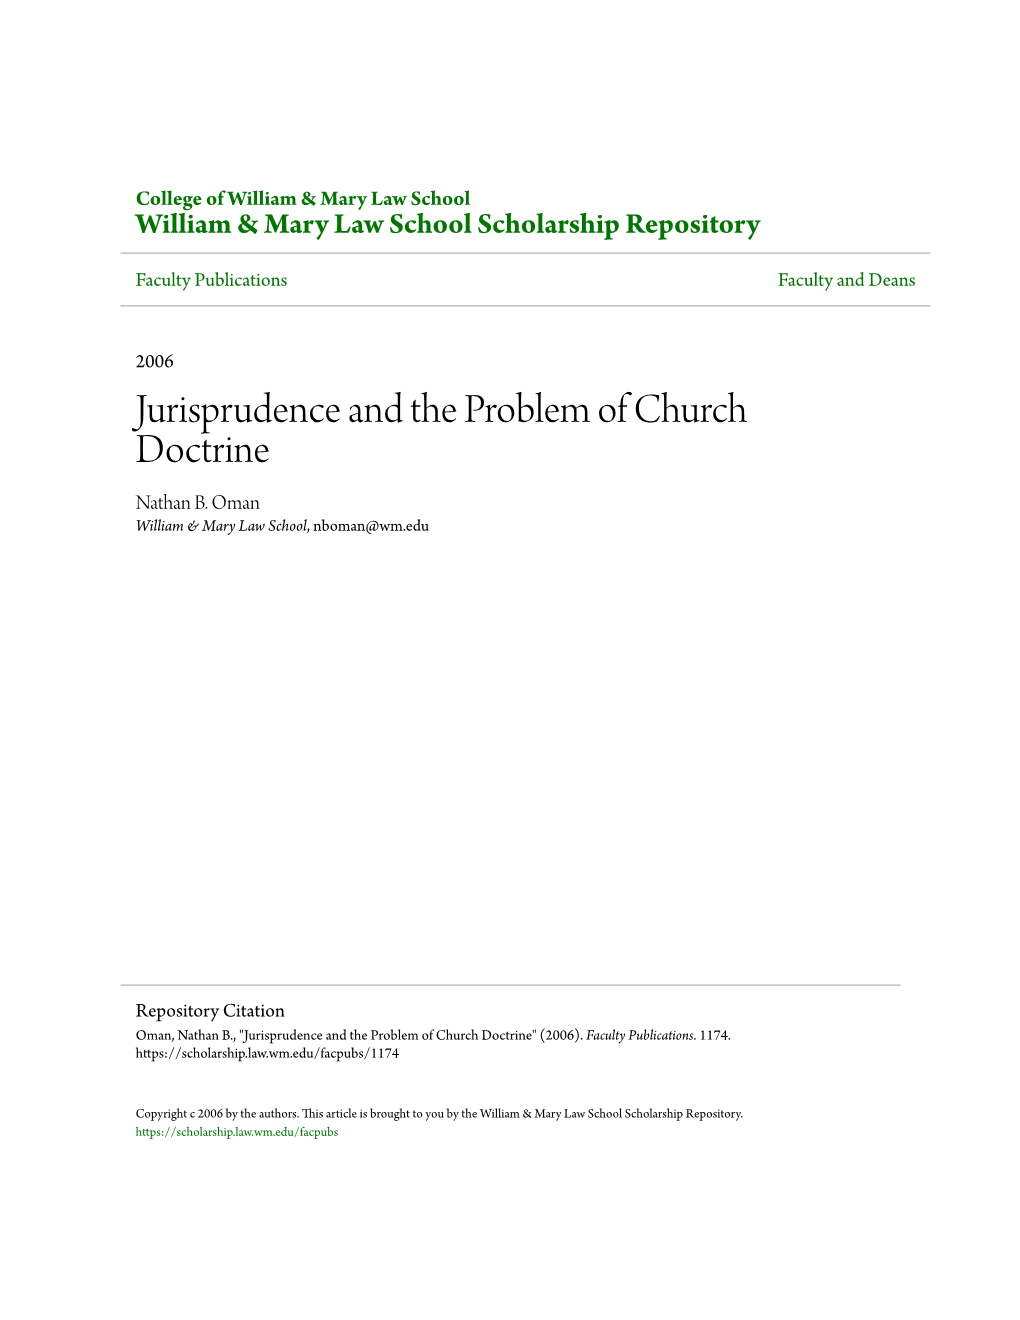 Jurisprudence and the Problem of Church Doctrine Nathan B